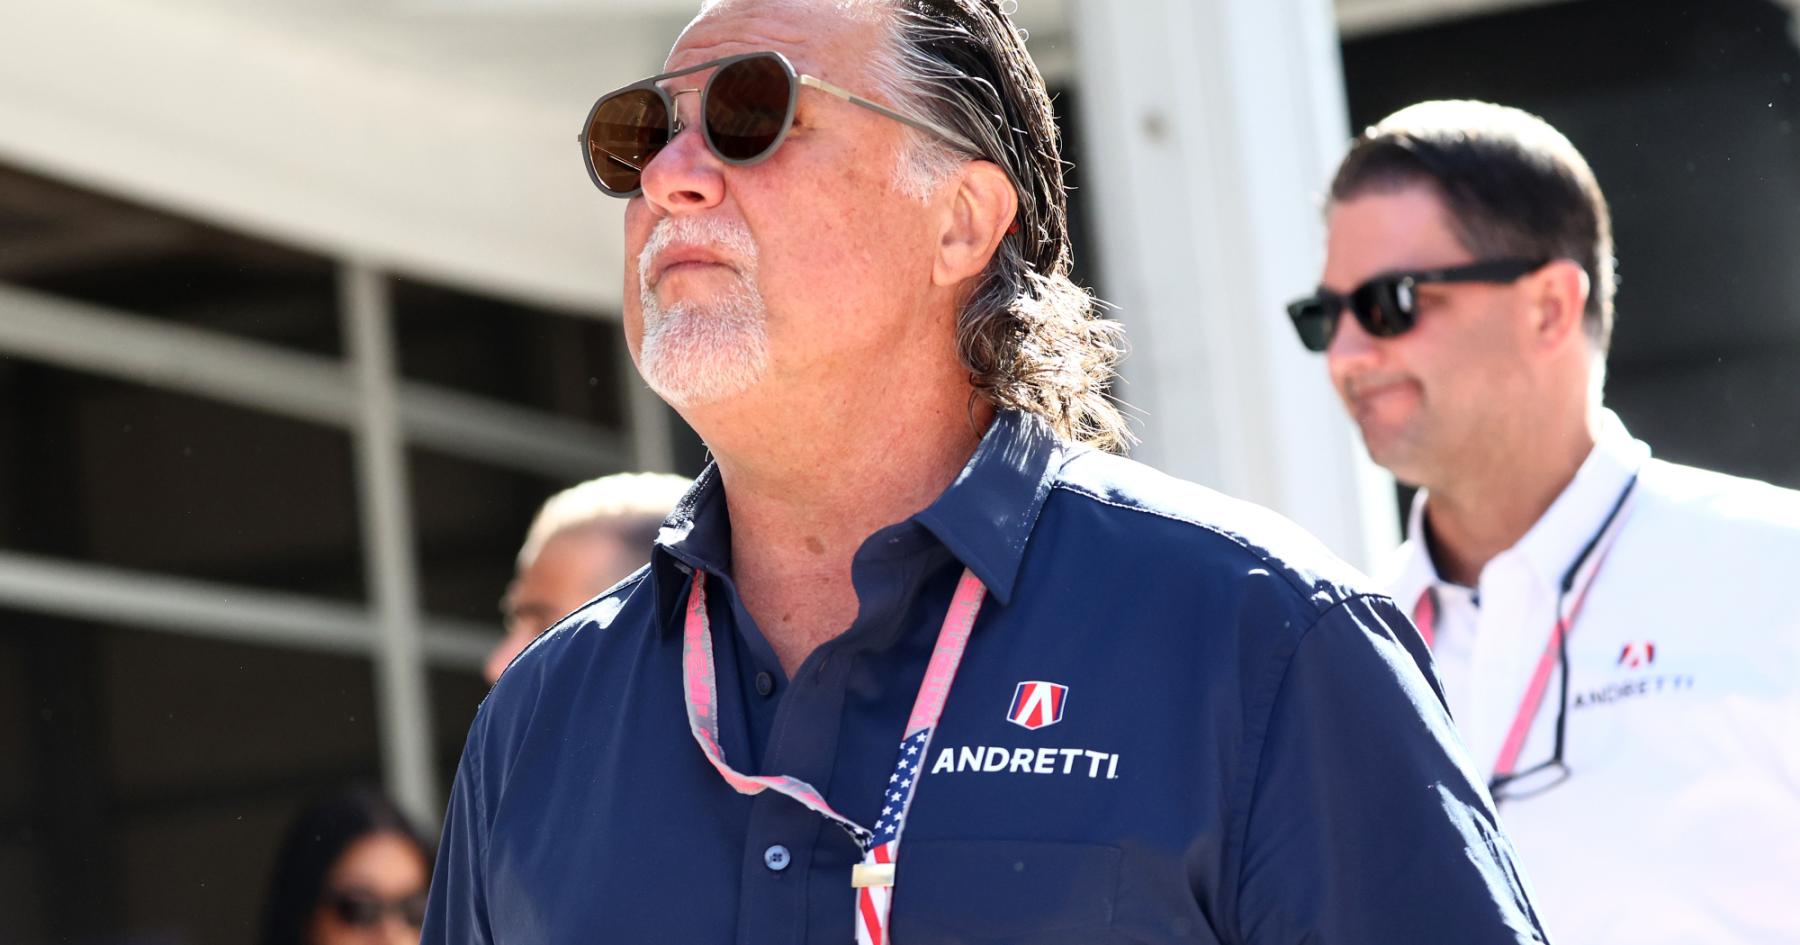 Racing Royalty: Andretti's Unprecedented Journey to F1 Stardom